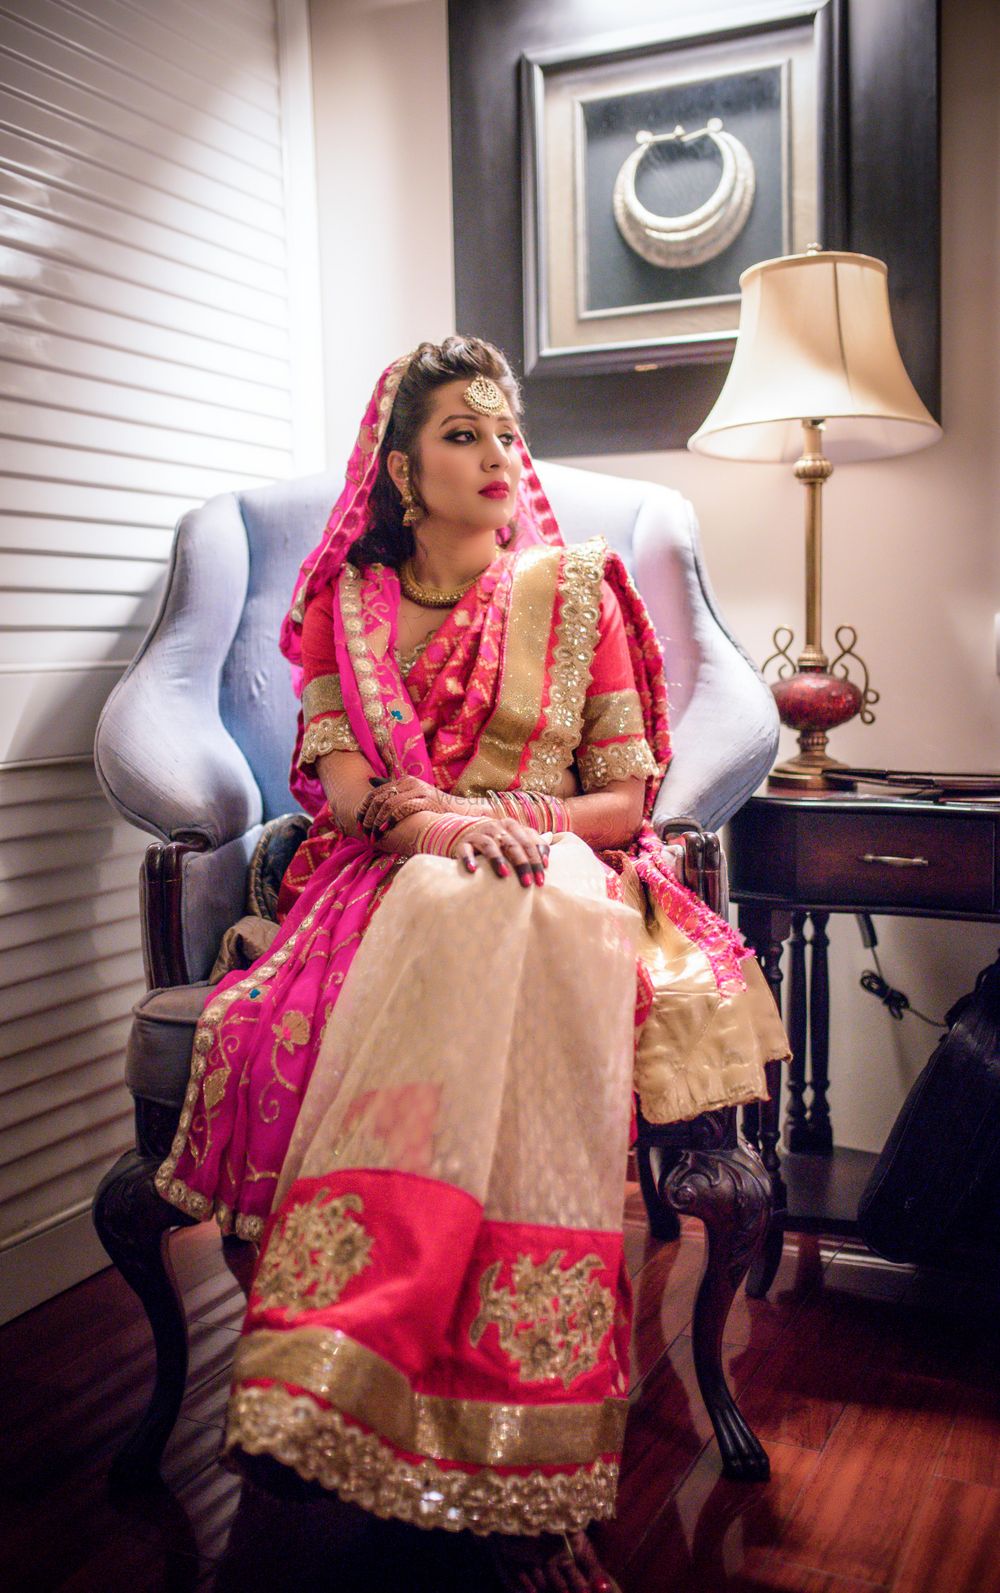 Photo of Bride wearing bright pink and white lehenga